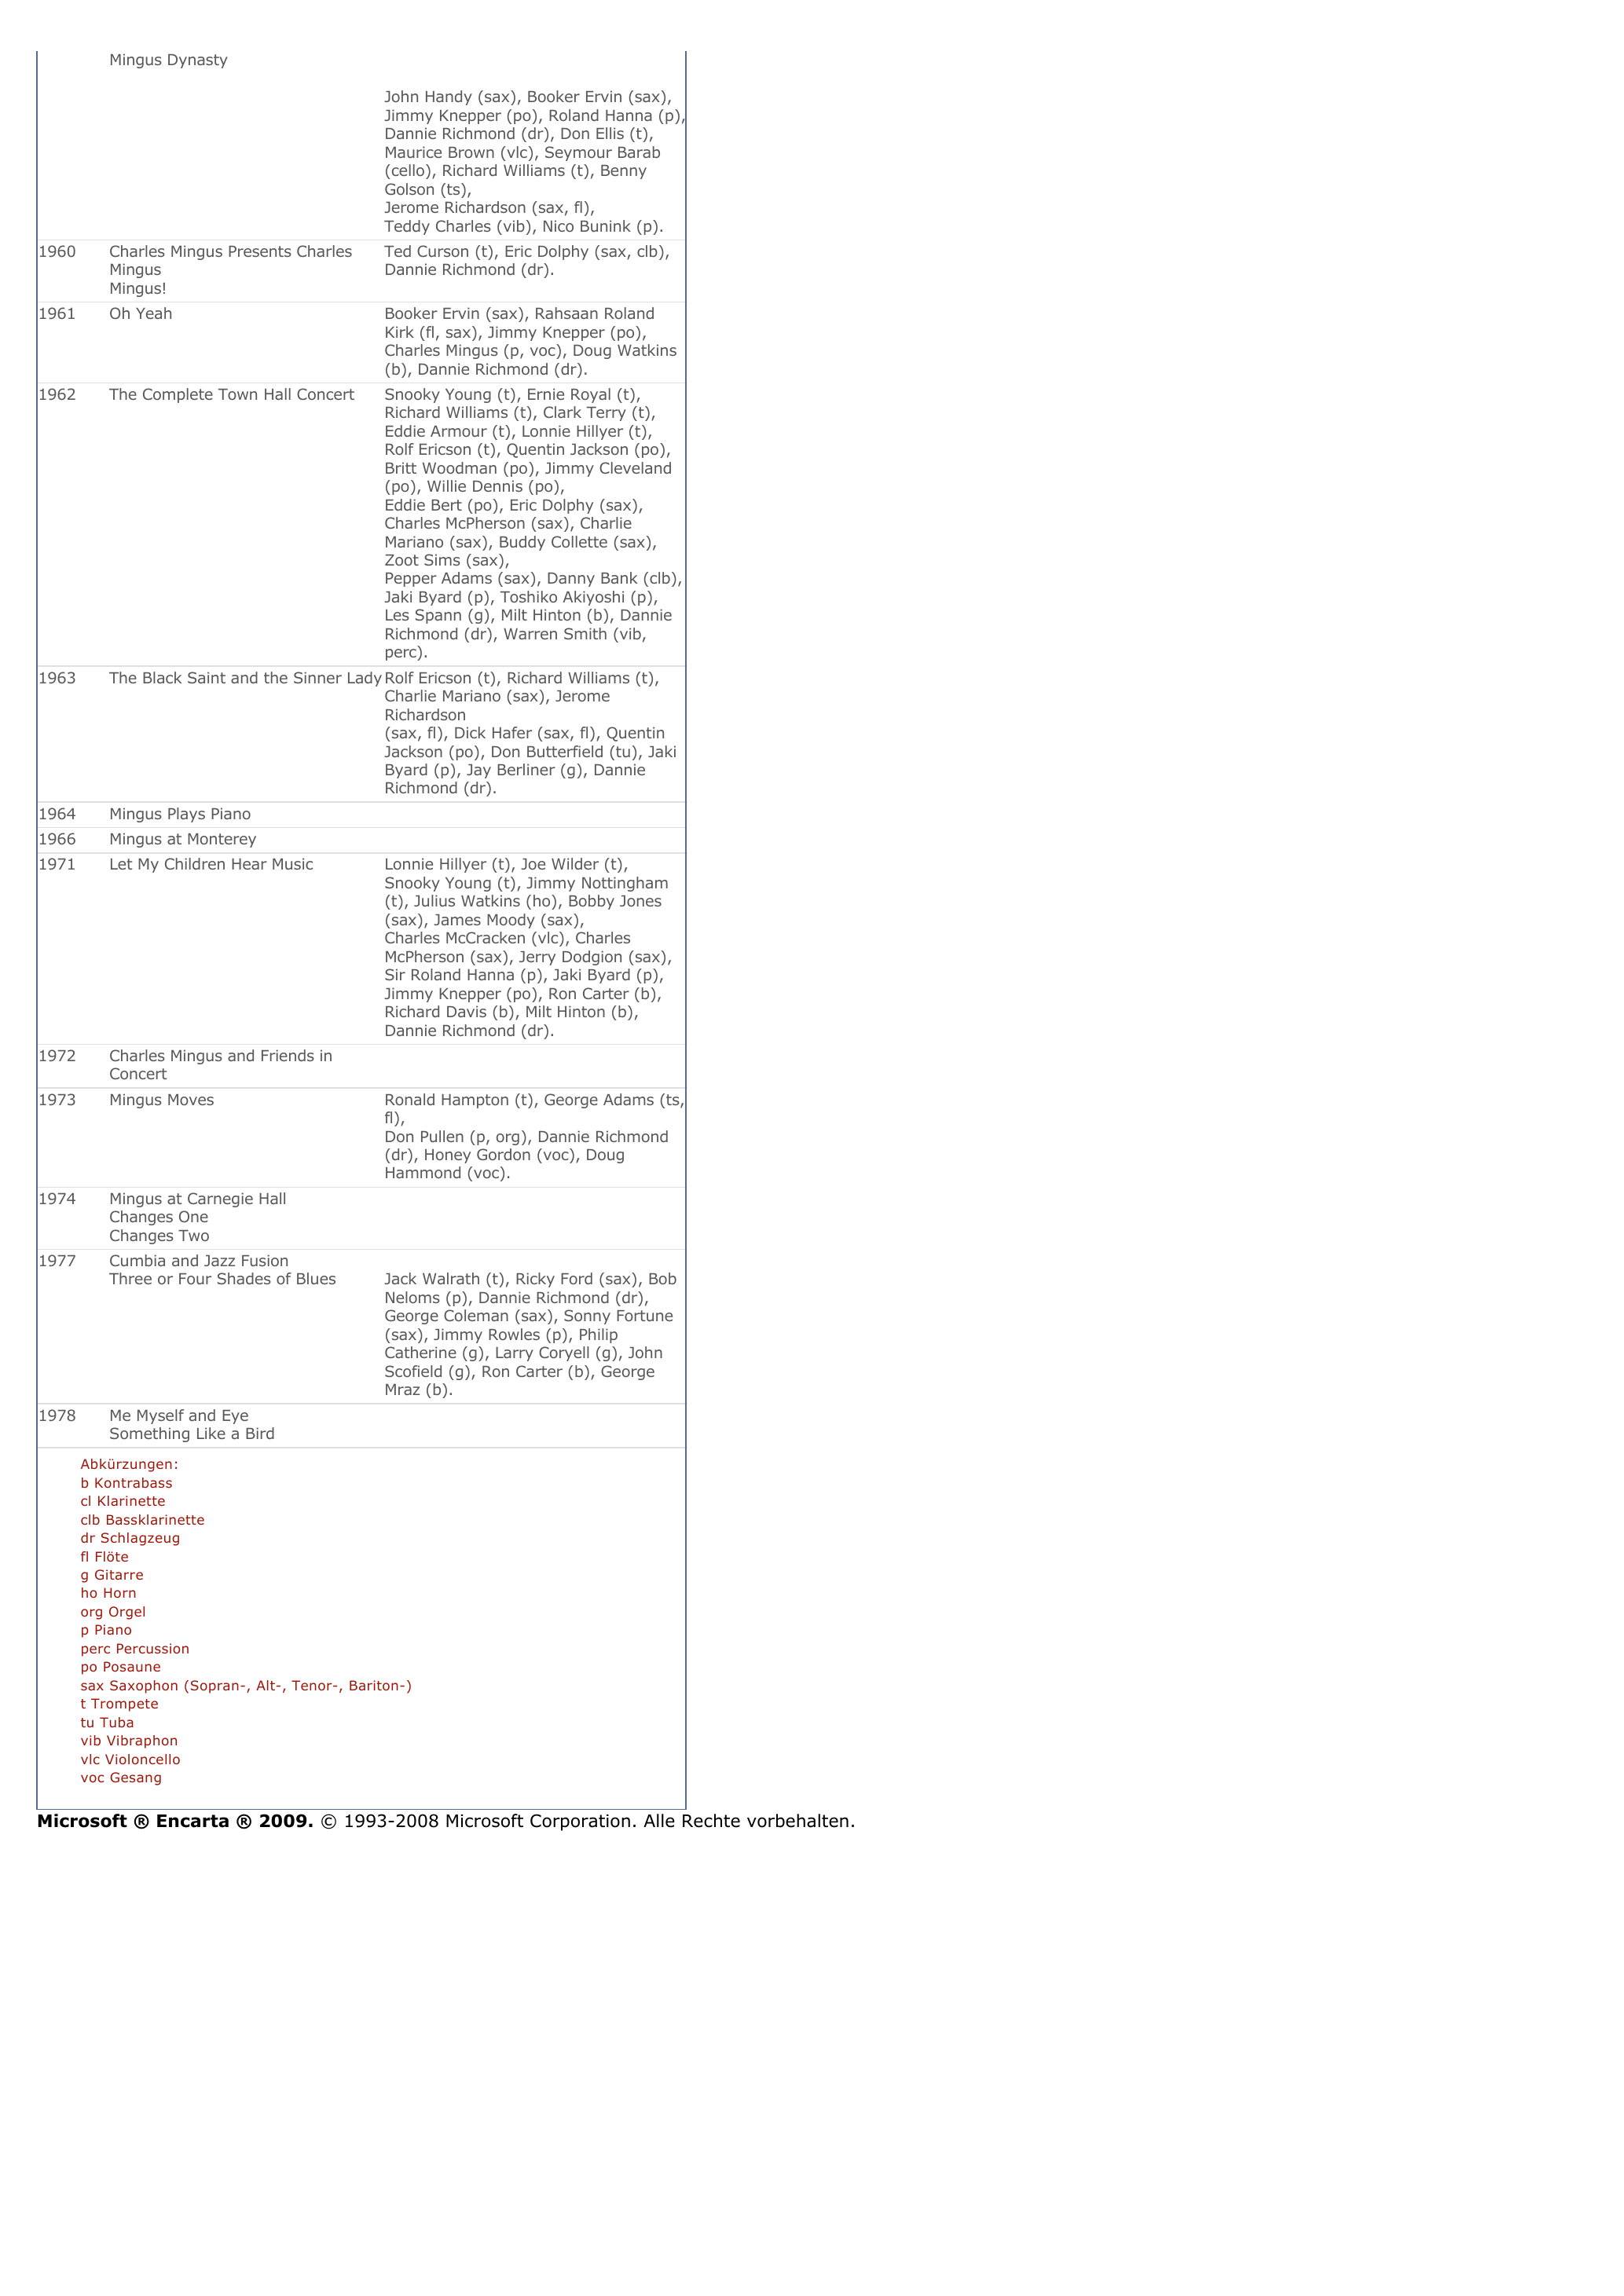 Prévisualisation du document Charles Mingus - Musik.